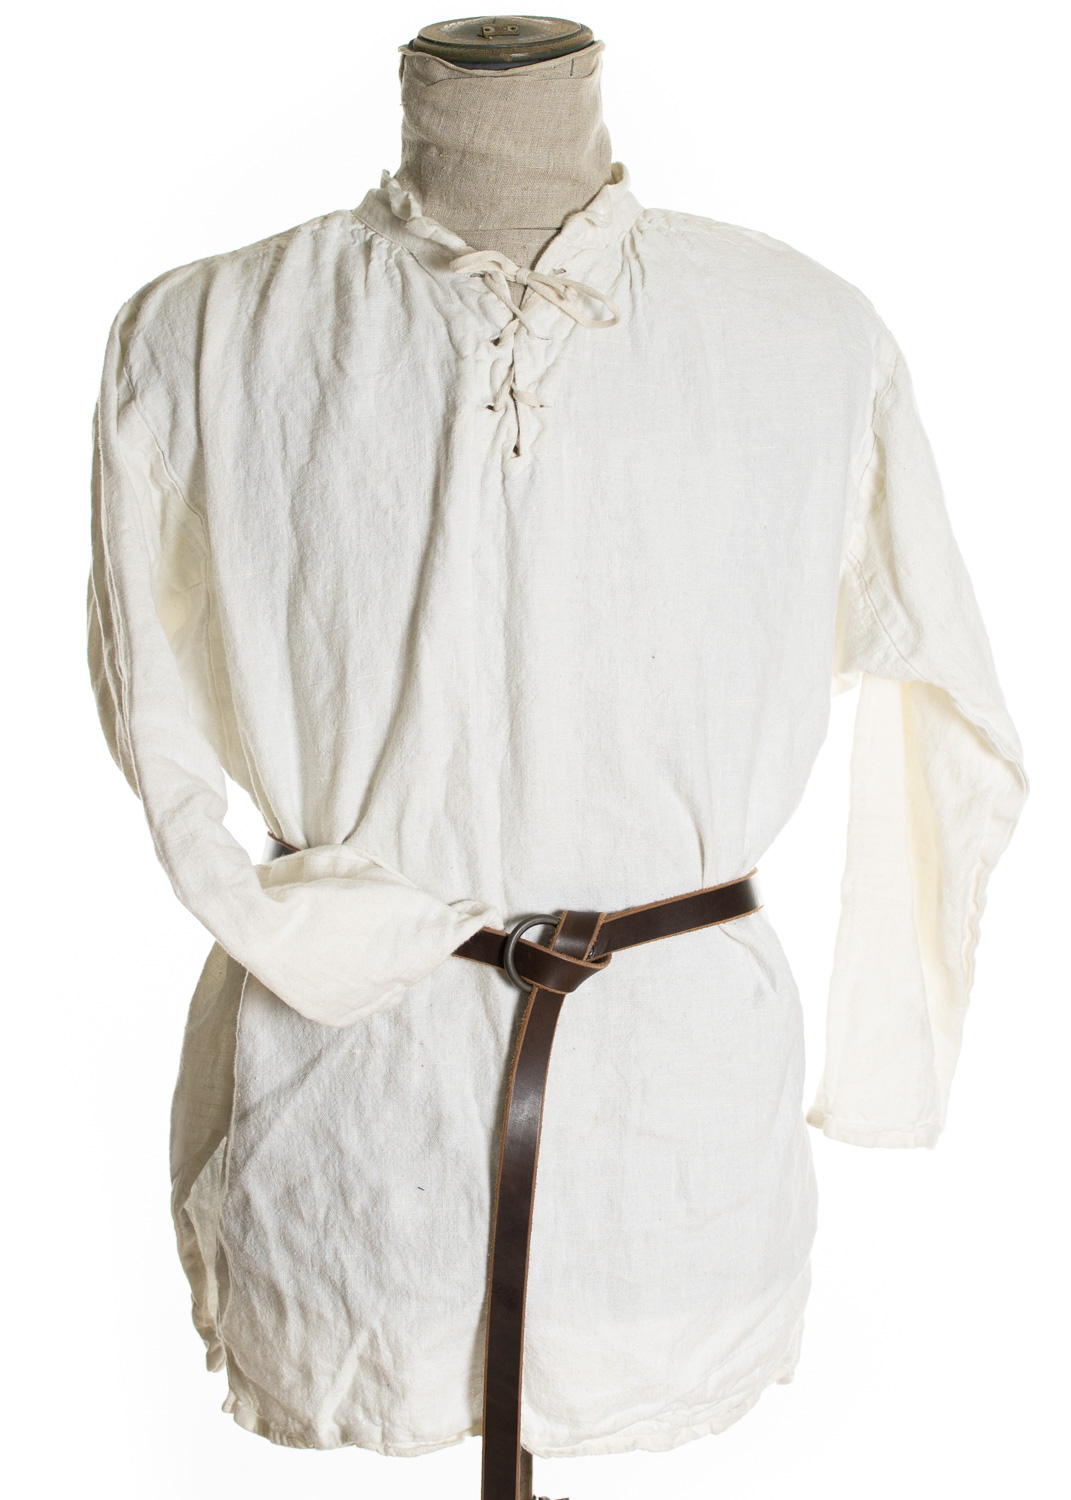 Medieval shirt in white linen